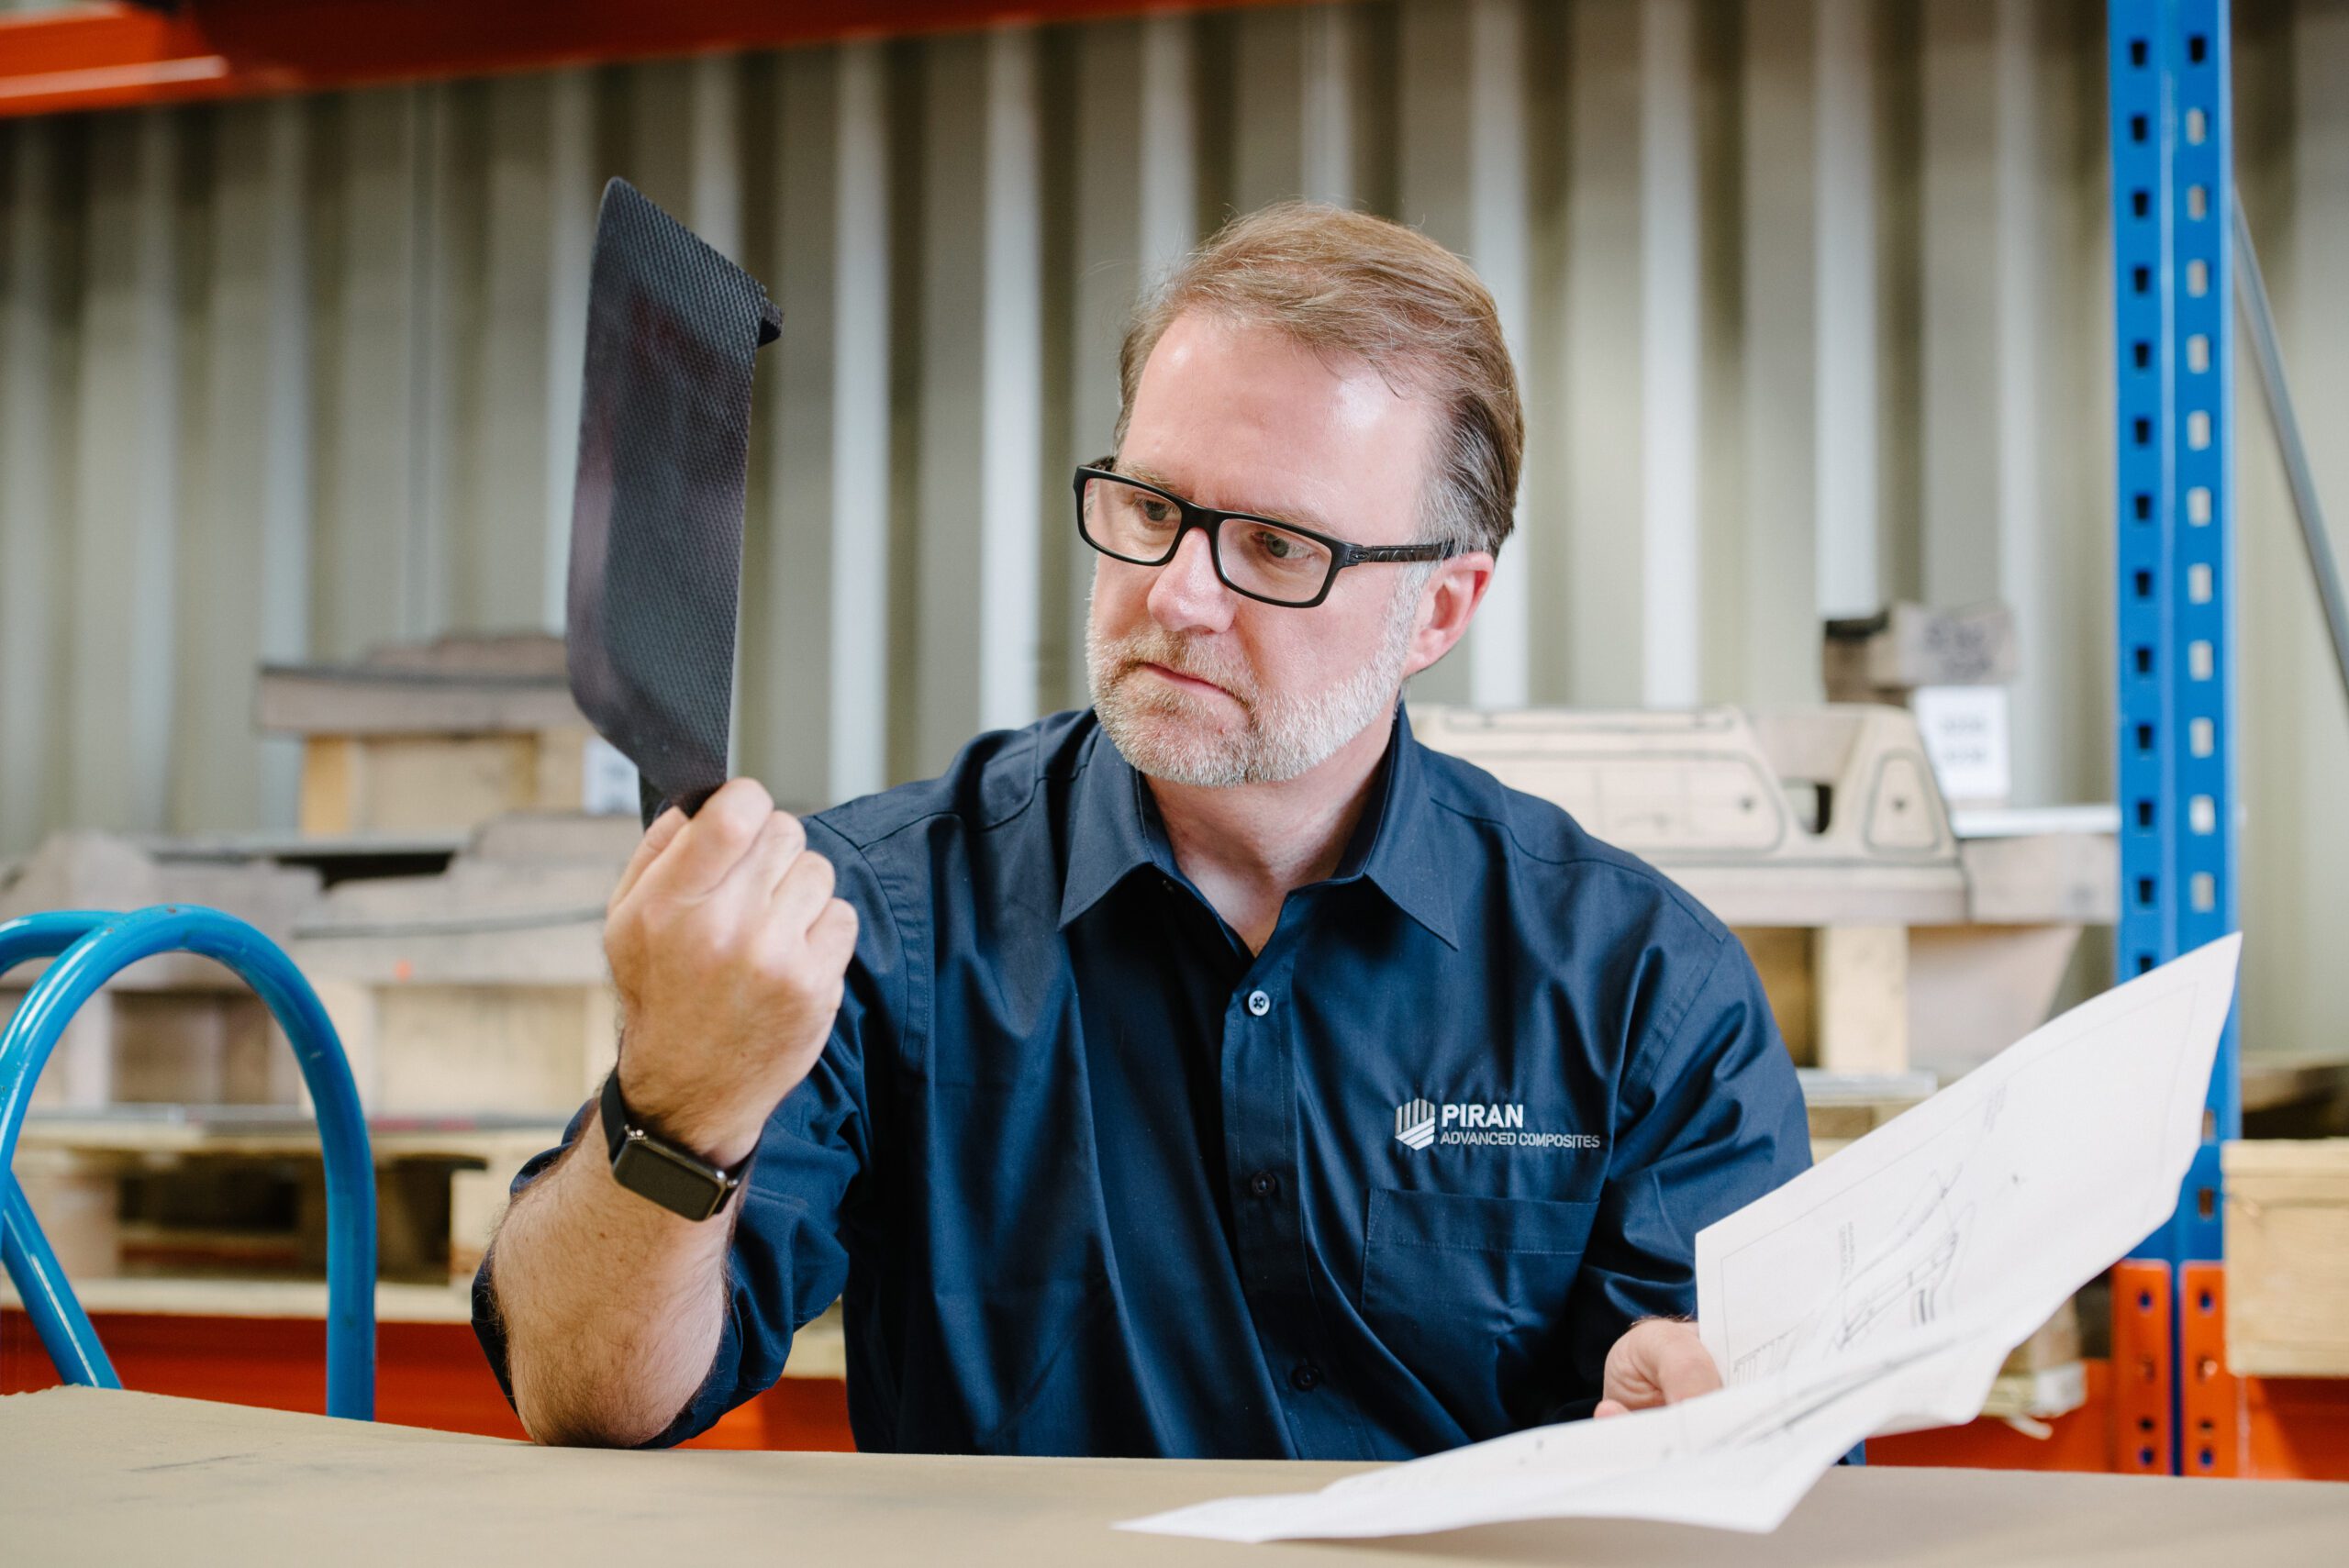 John Armstrong, Design Engineer at Piran Advanced Composites looking at part and drawings.